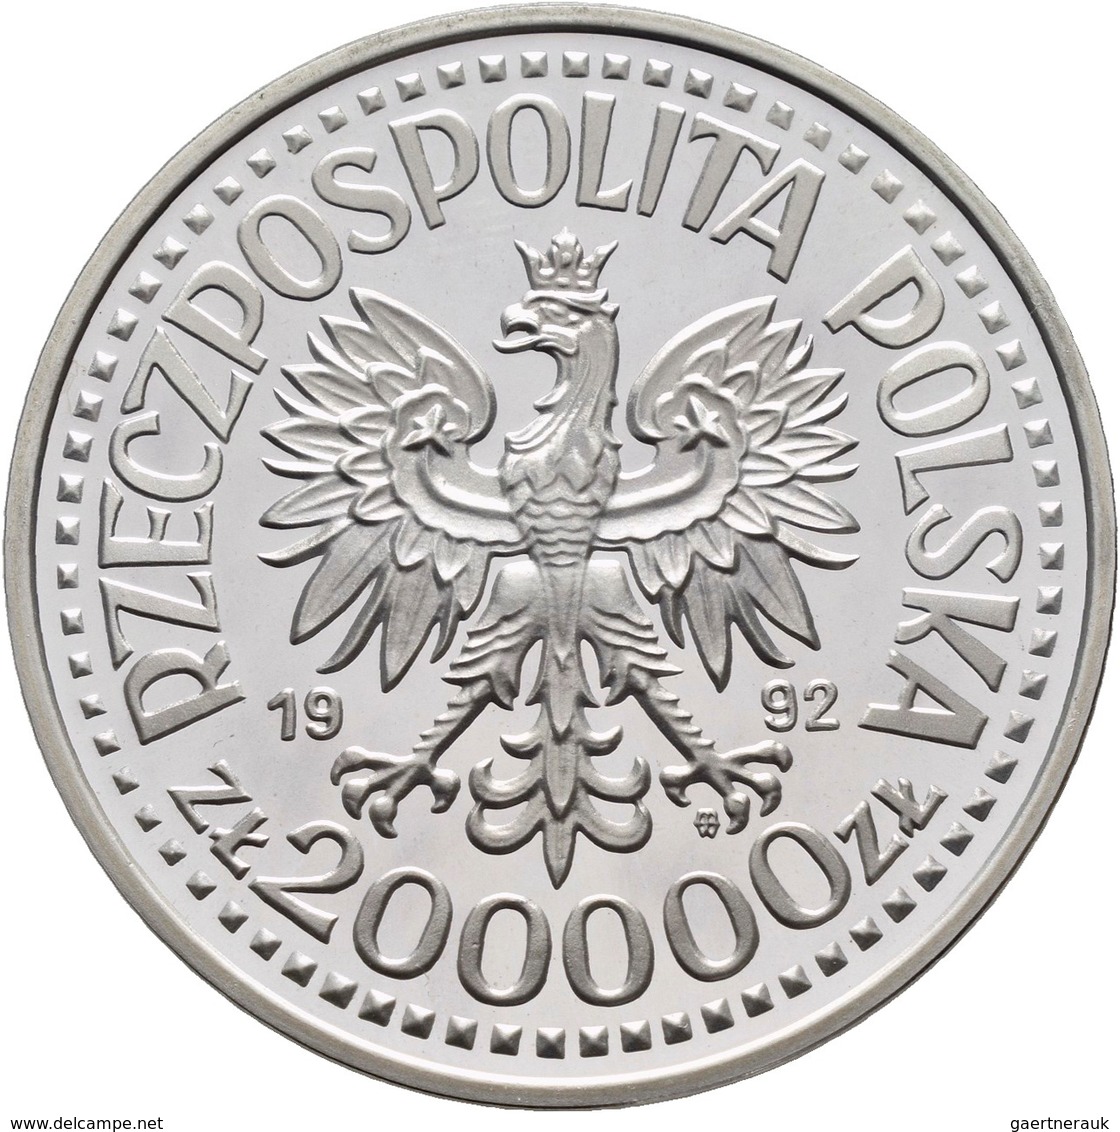 Polen: 200.000 Zlotych 1992, Wladyslaw III Warnenczyk, KM# Y 253. Polierte Platte. - Polen